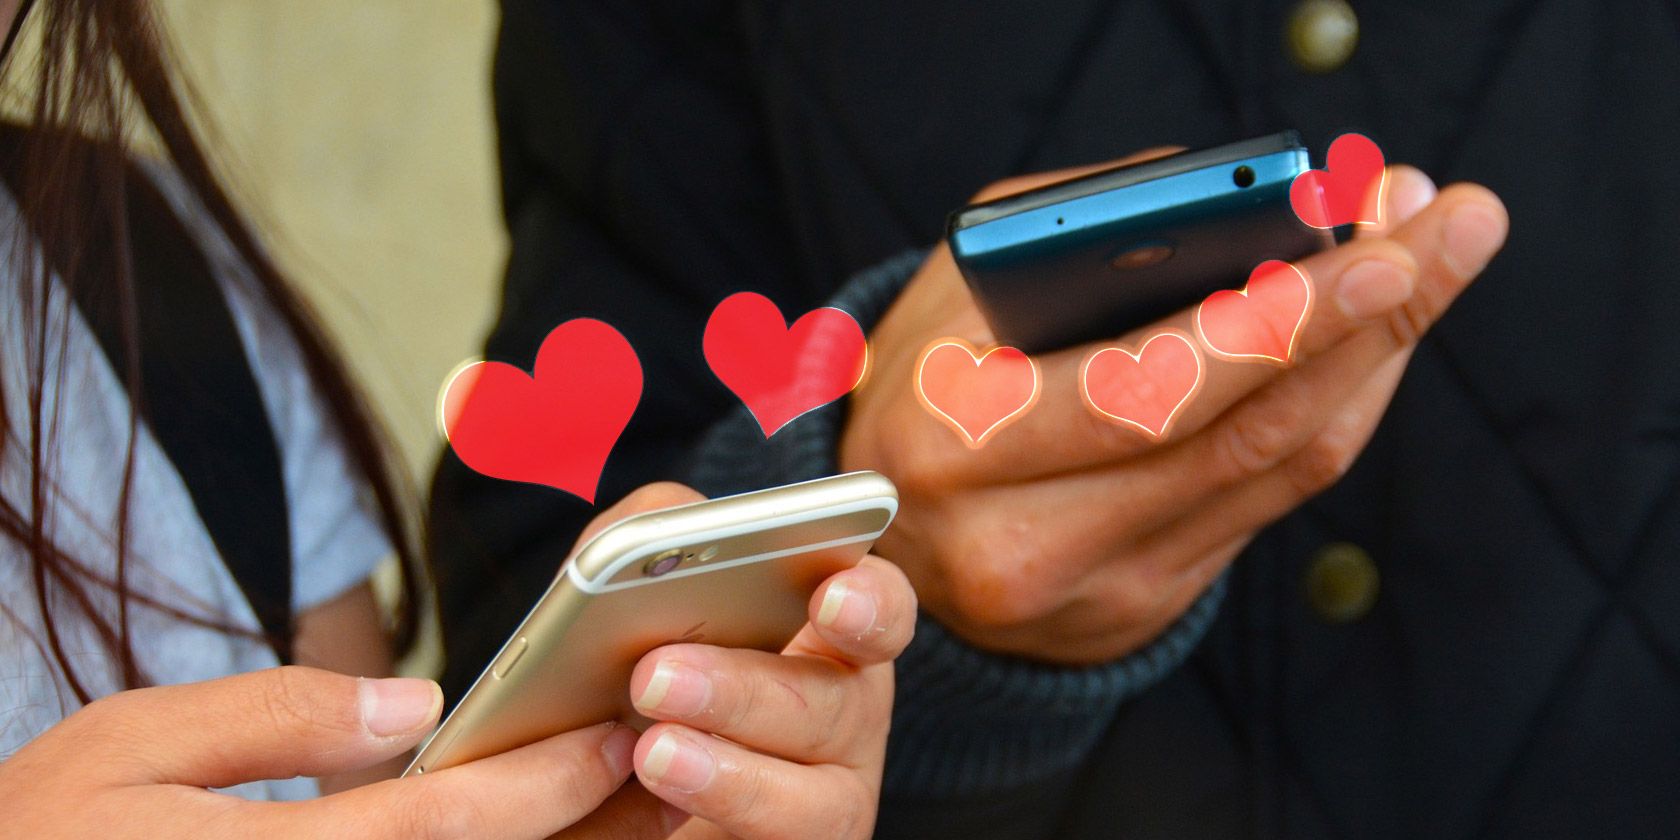 BestSmmPanel Adult Online Dating Solutions - Fast, Effortless Adult Conferences dating apps